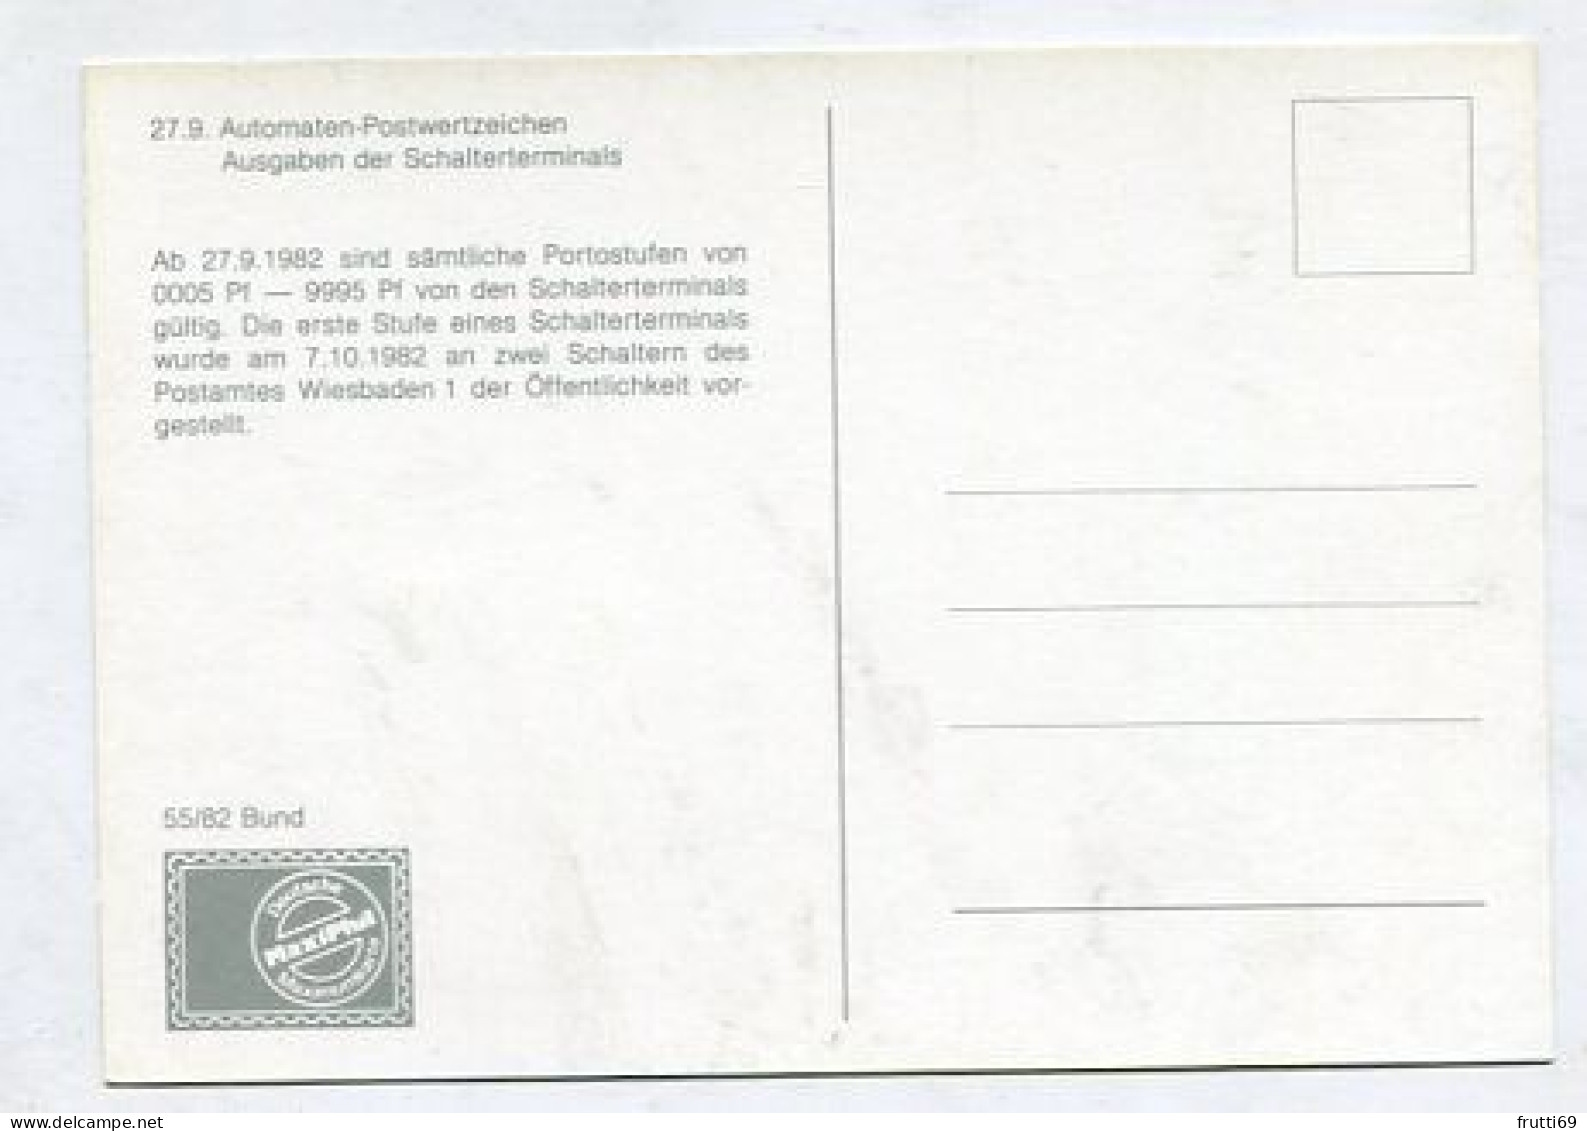 MC 211938 GERMANY - 1982 - Automaten-Postwertzeichen - 1981-2000